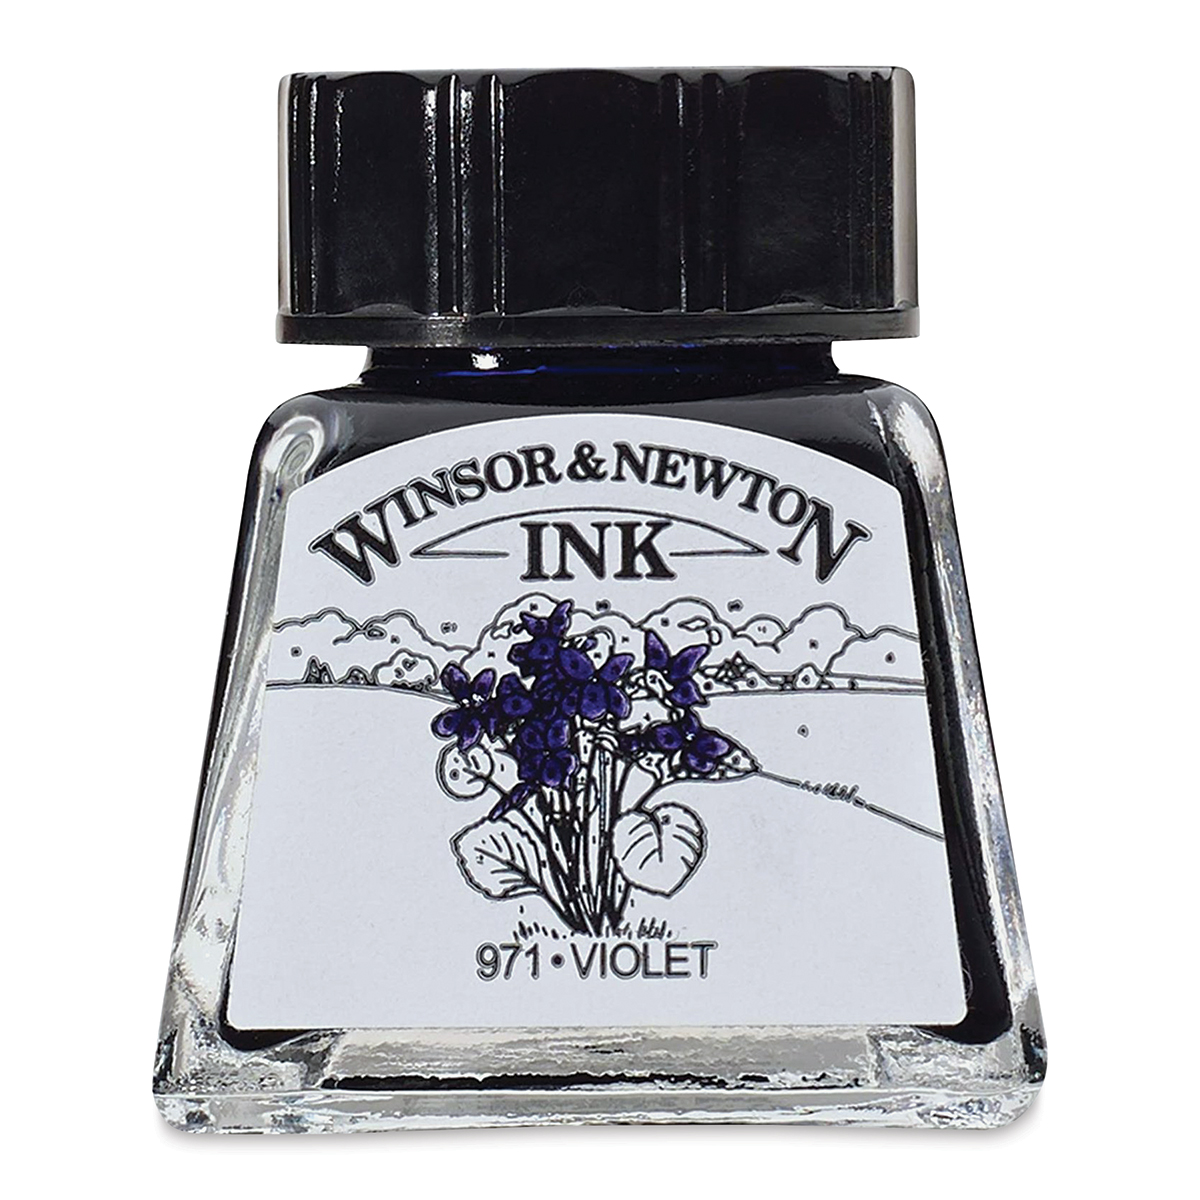 Winsor & Newton Drawing Ink - 30 ml, Black Indian